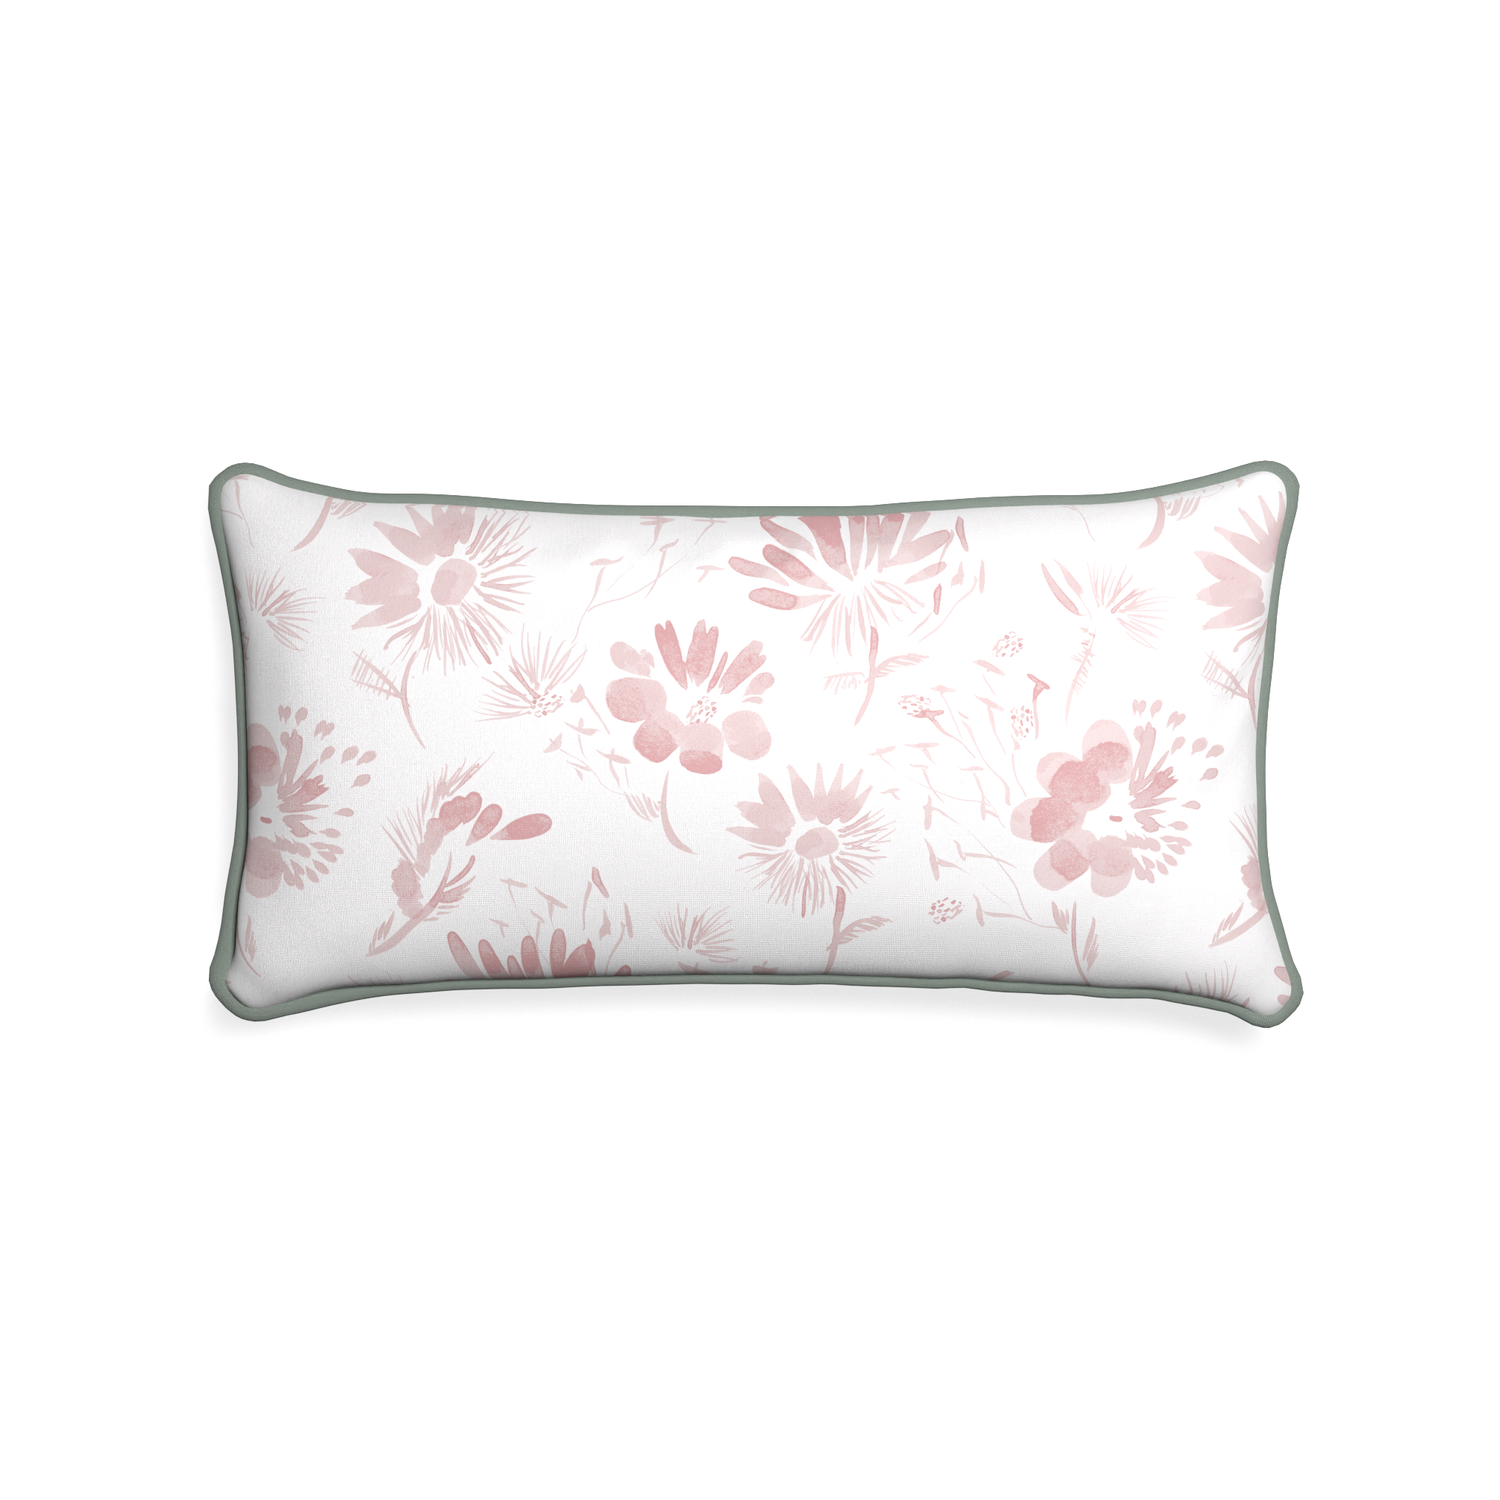 Midi-lumbar blake custom pink floralpillow with sage piping on white background